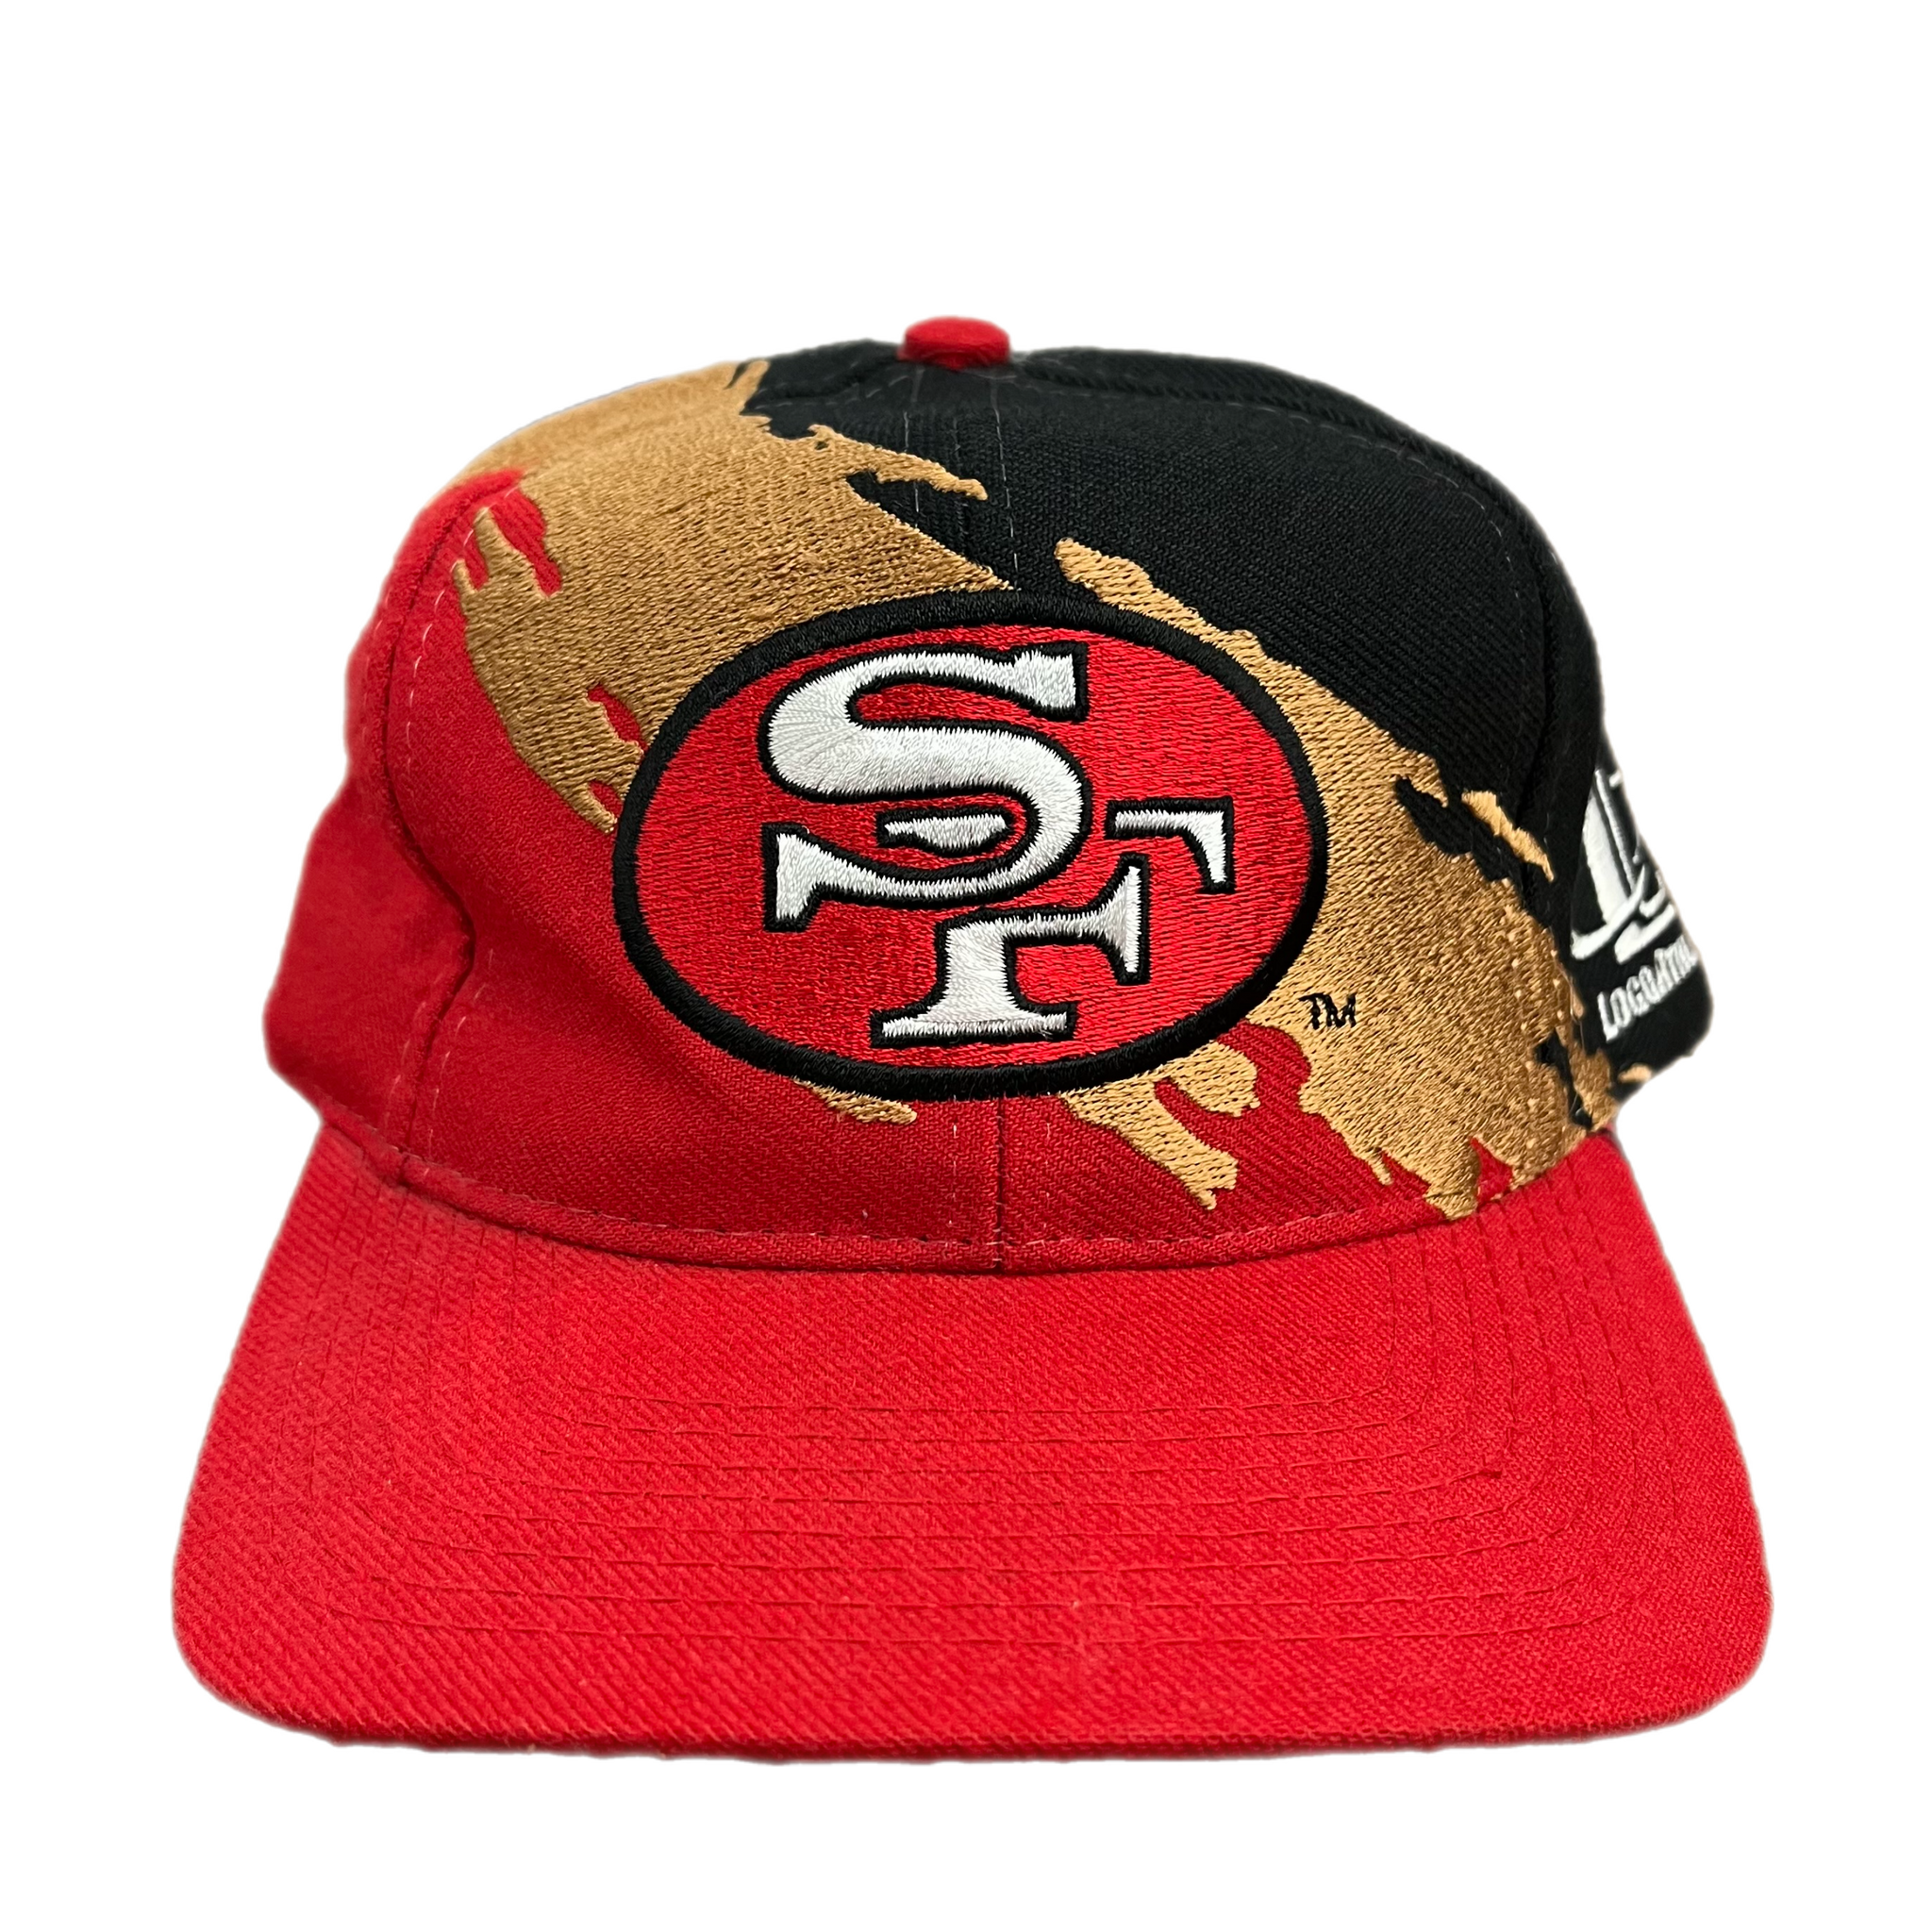 NFL San Francisco 49ers Pro Line Hat with Tags - Vintage Snapback